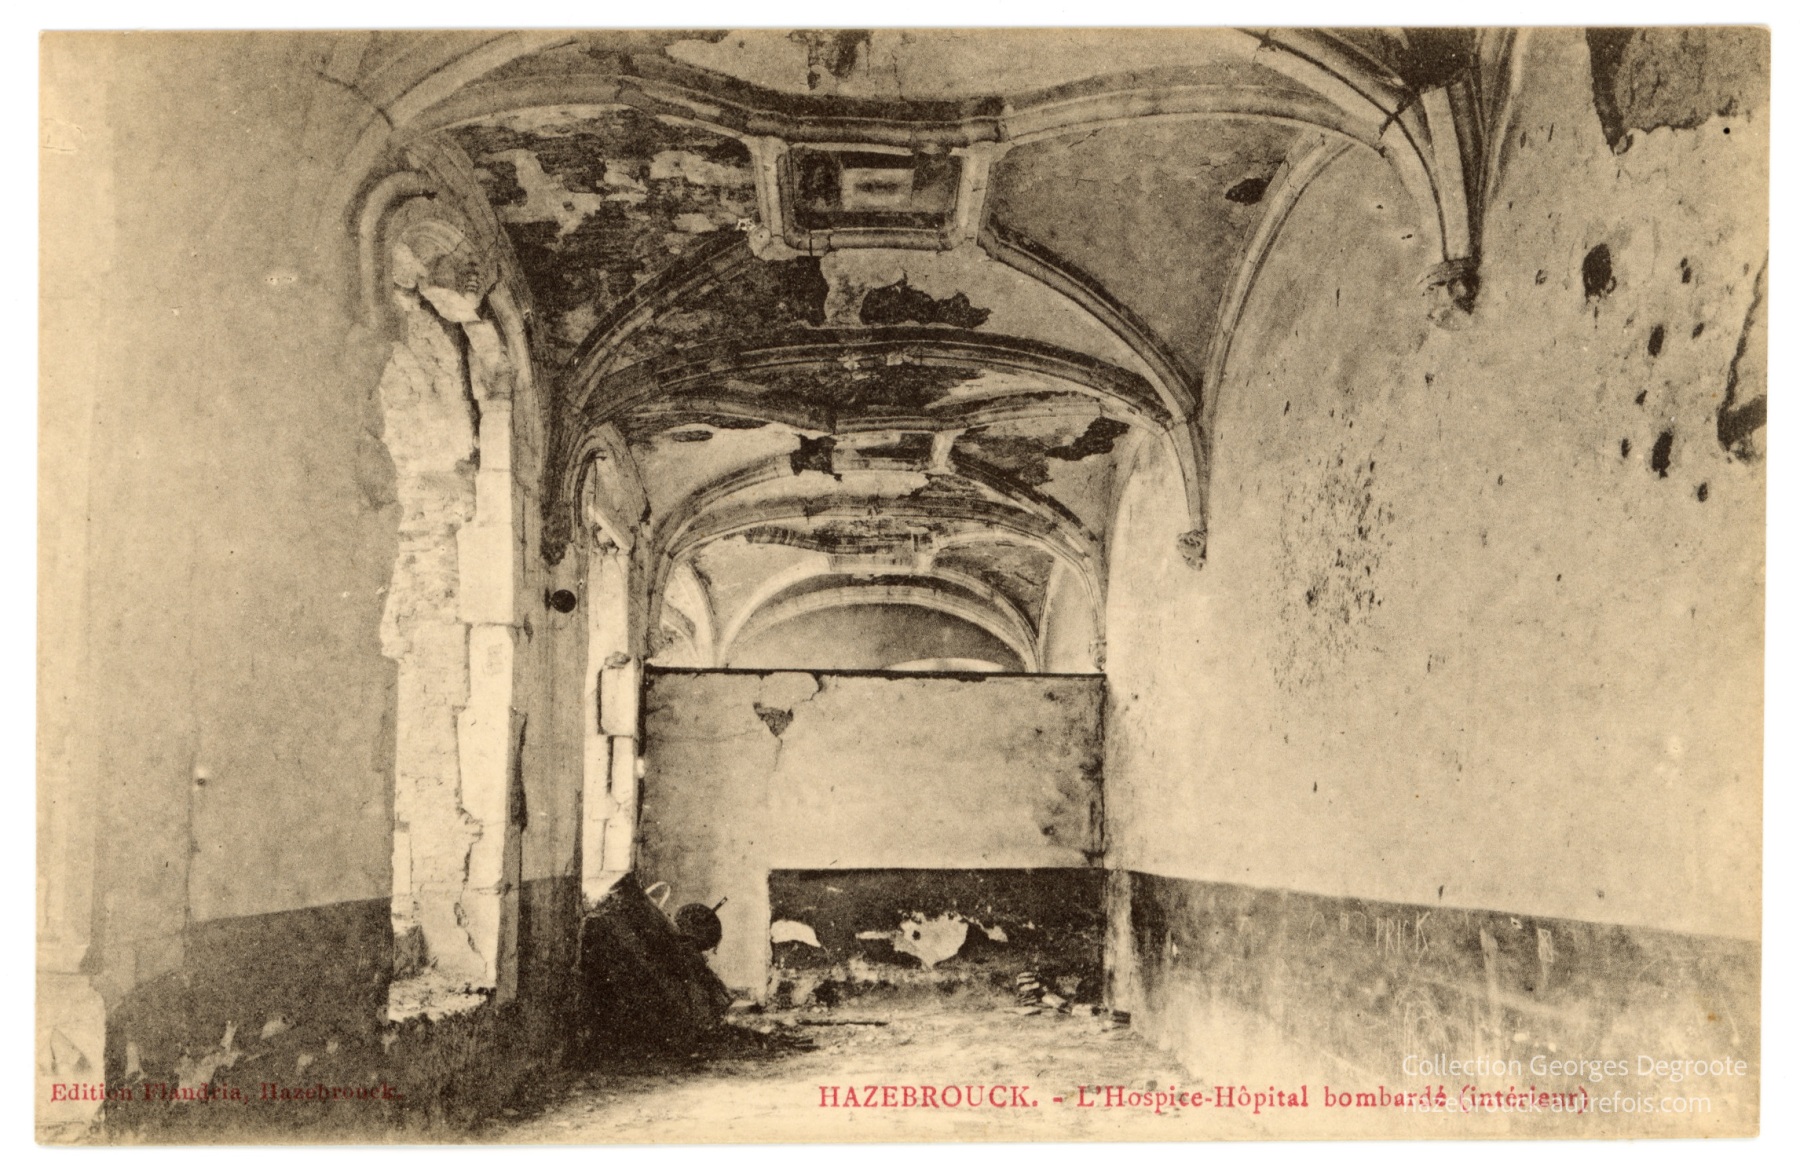 L'Hospice-Hôpital bombardé (Intérieur)